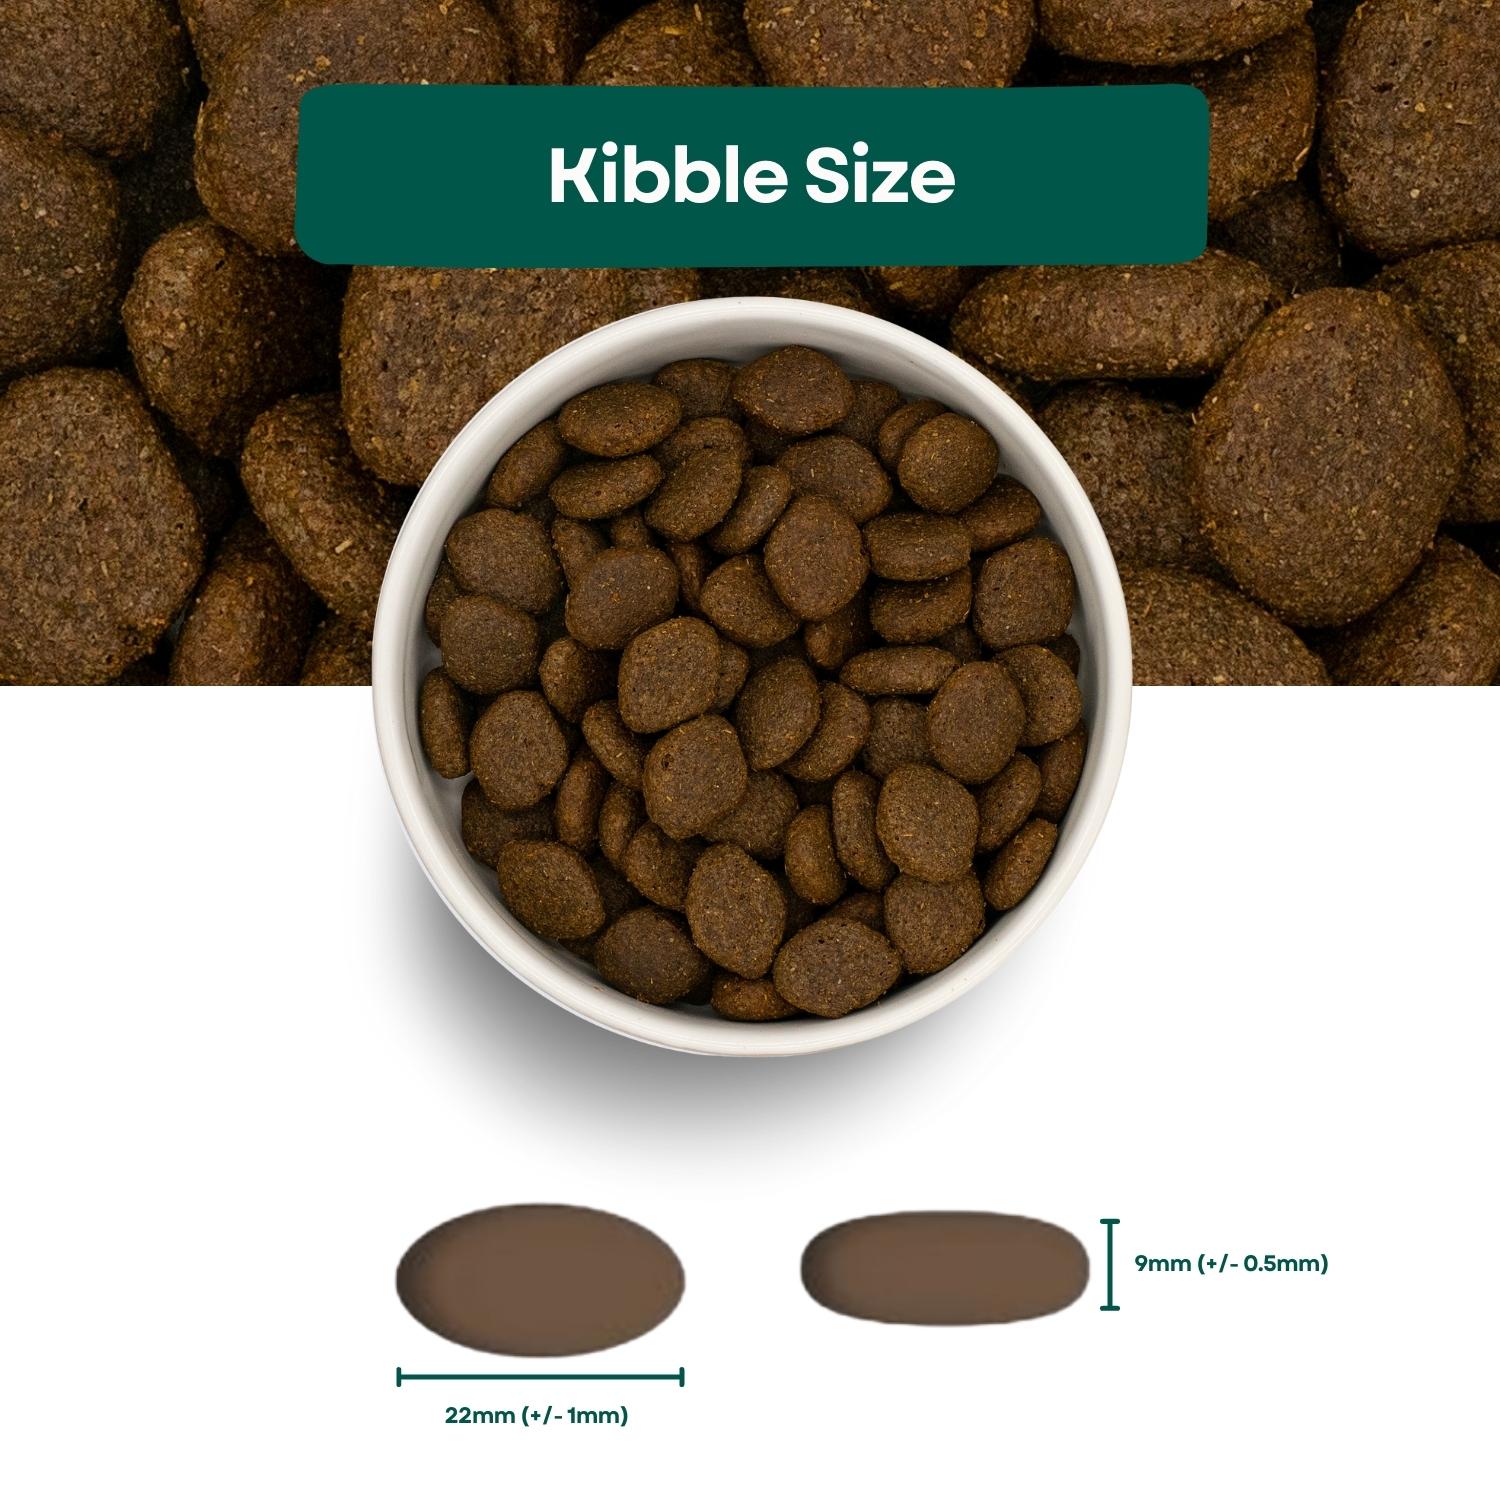 Kibble Size Super Premium Adult Dog Food - Salmon & Potato